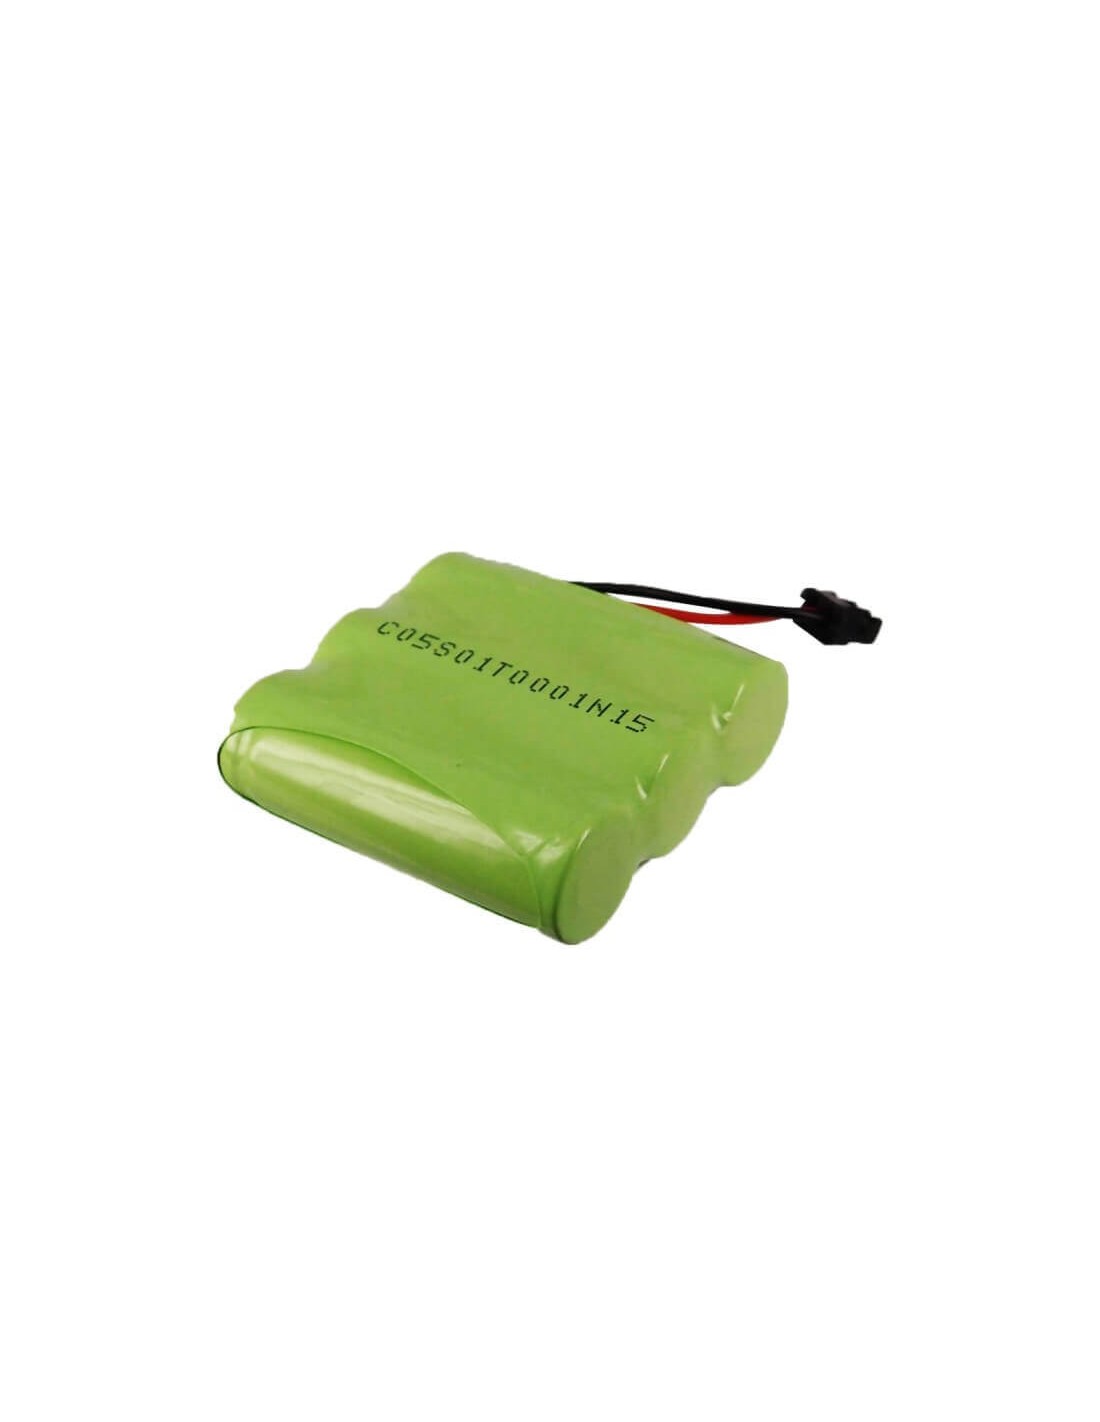 Battery for Memorex, Bt-905, Mph-6928, Mph-6929, Mph-6935, 3.6V, 1200mAh - 4.32Wh